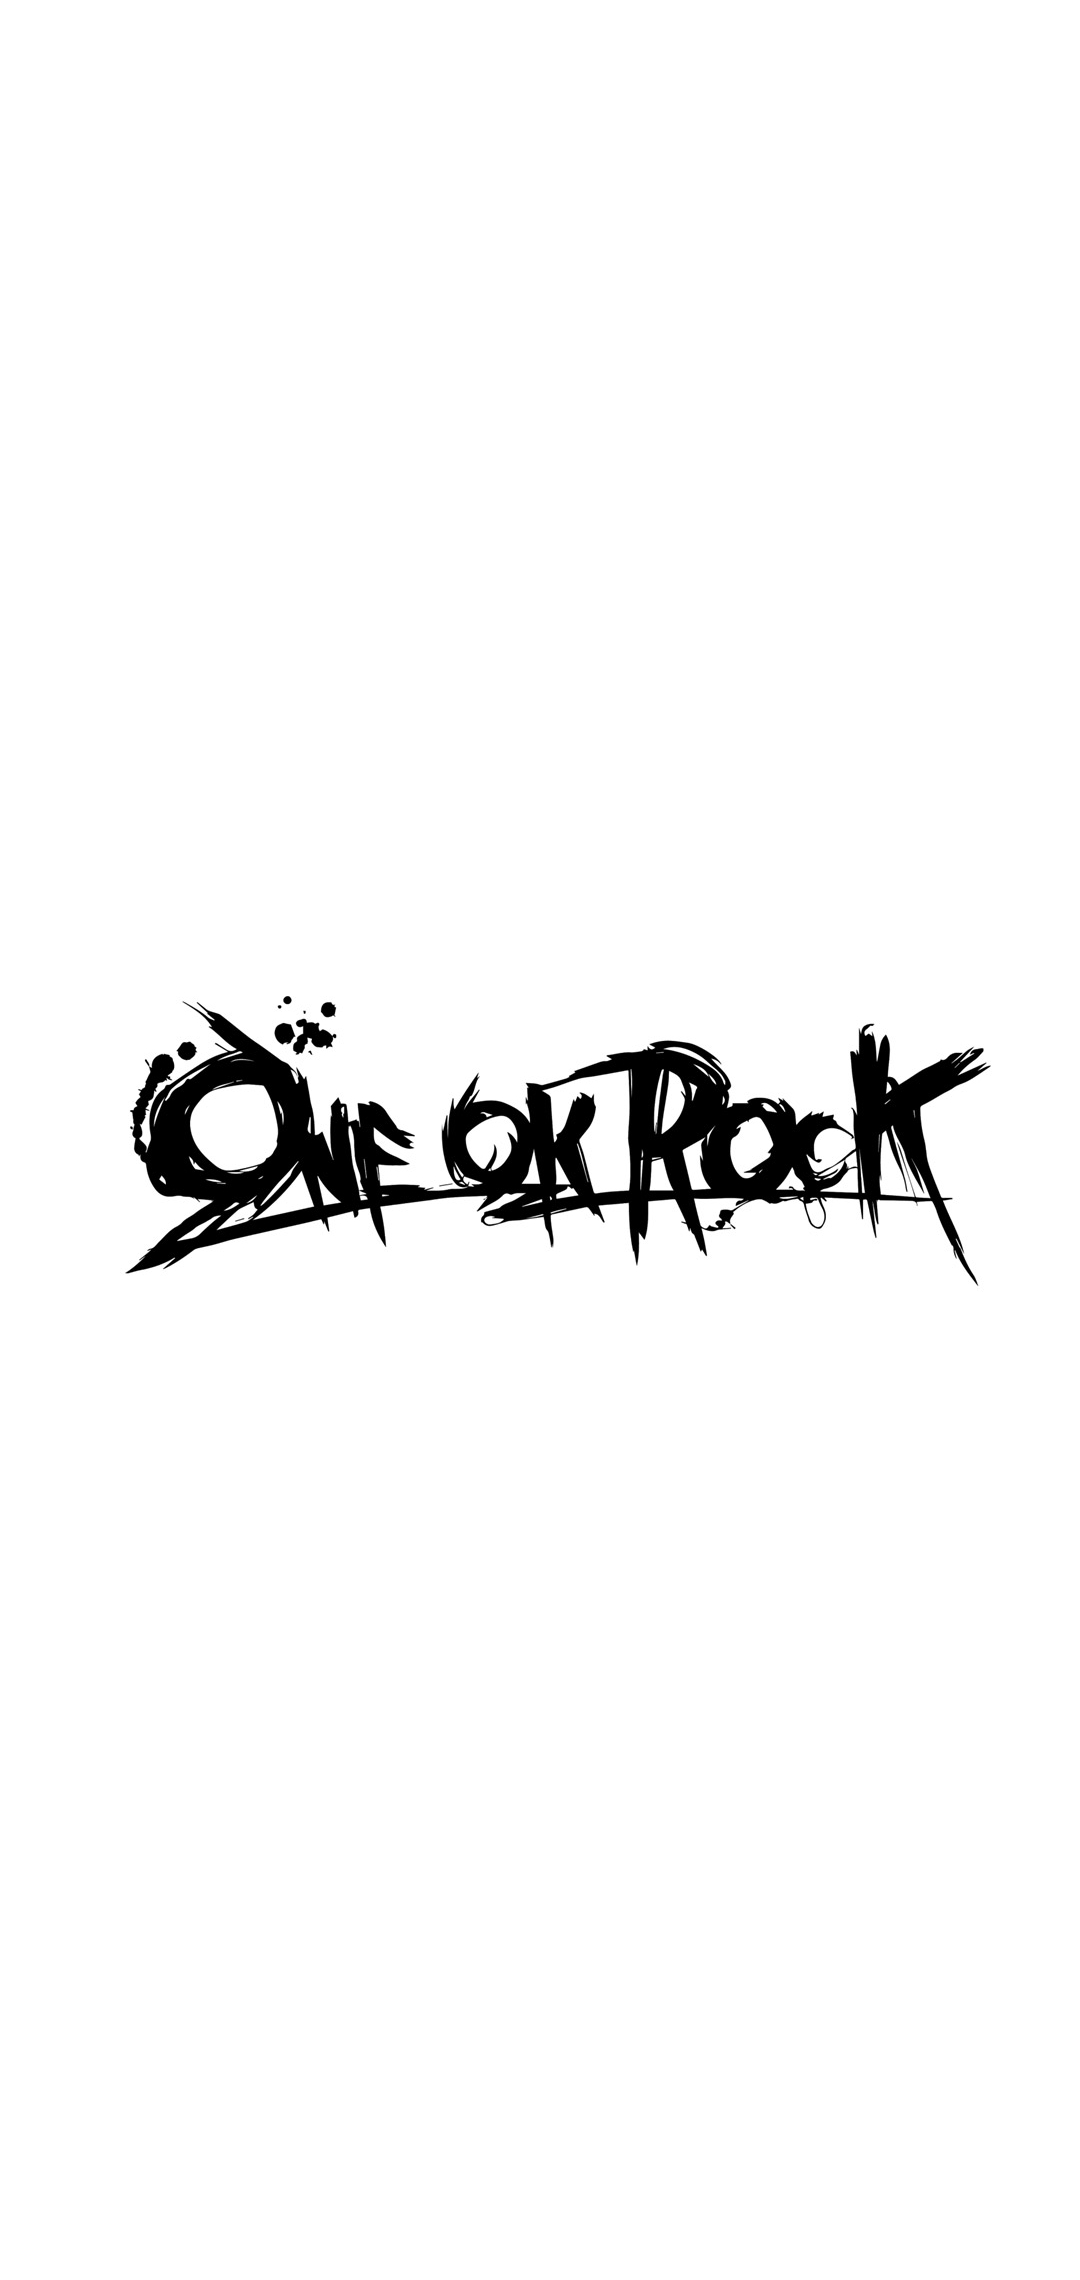 One Ok Rock Android One S8 壁紙 待ち受け Sumaran